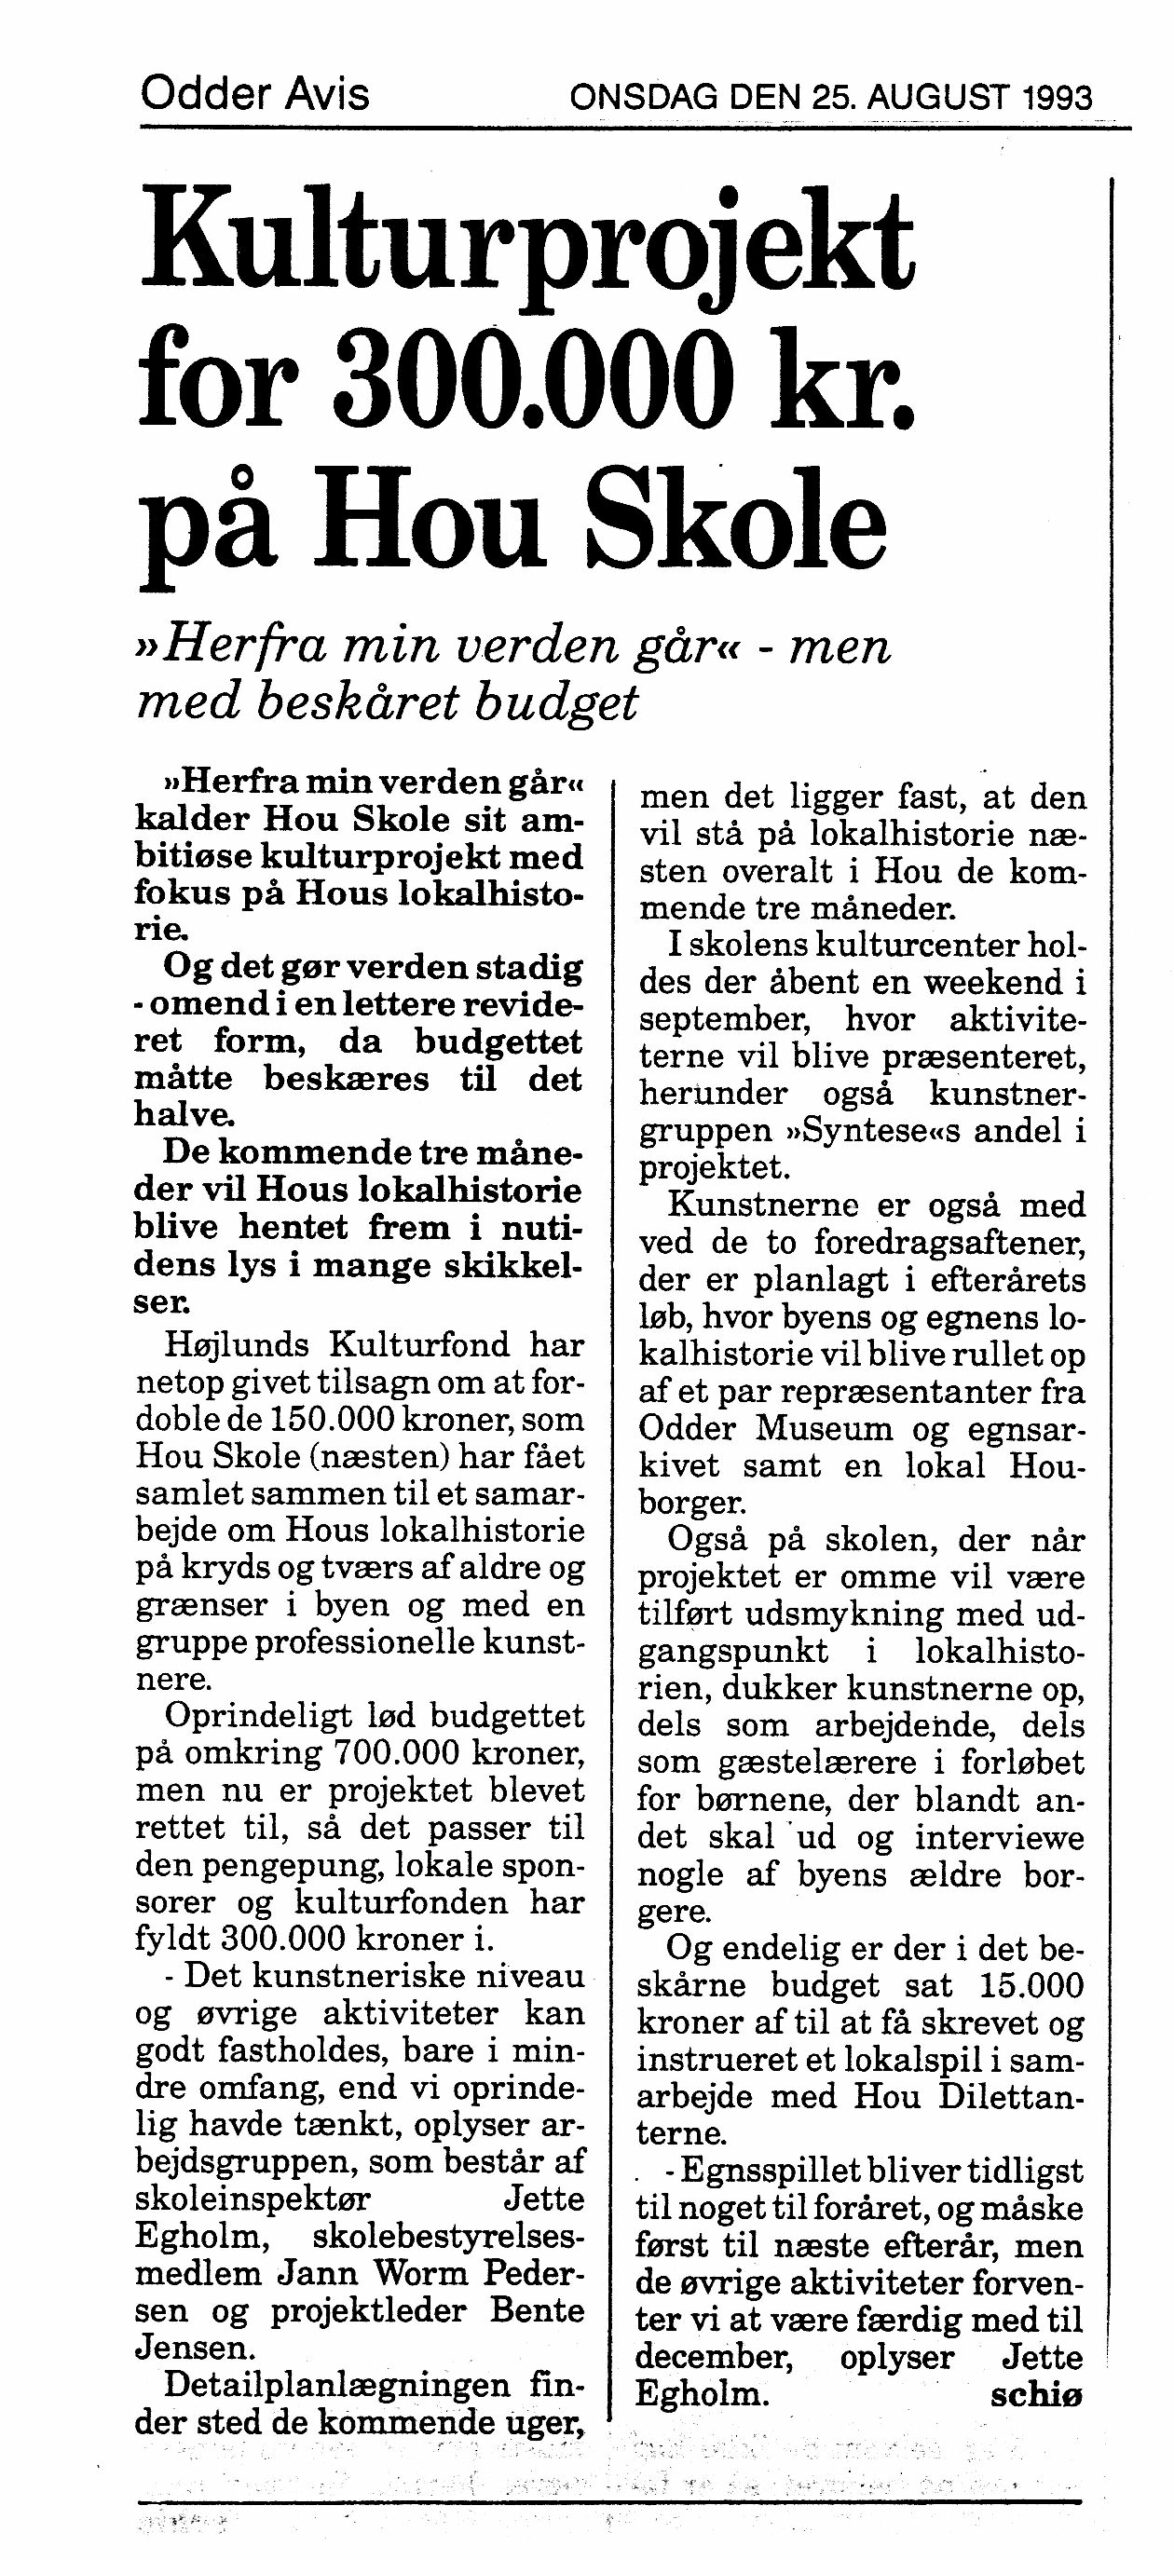 Kulturprojekt for 300.000 kr. på Hou Skole. Omtale (Herfra min verden går, Hou Skole). schiø. Odder Avis.